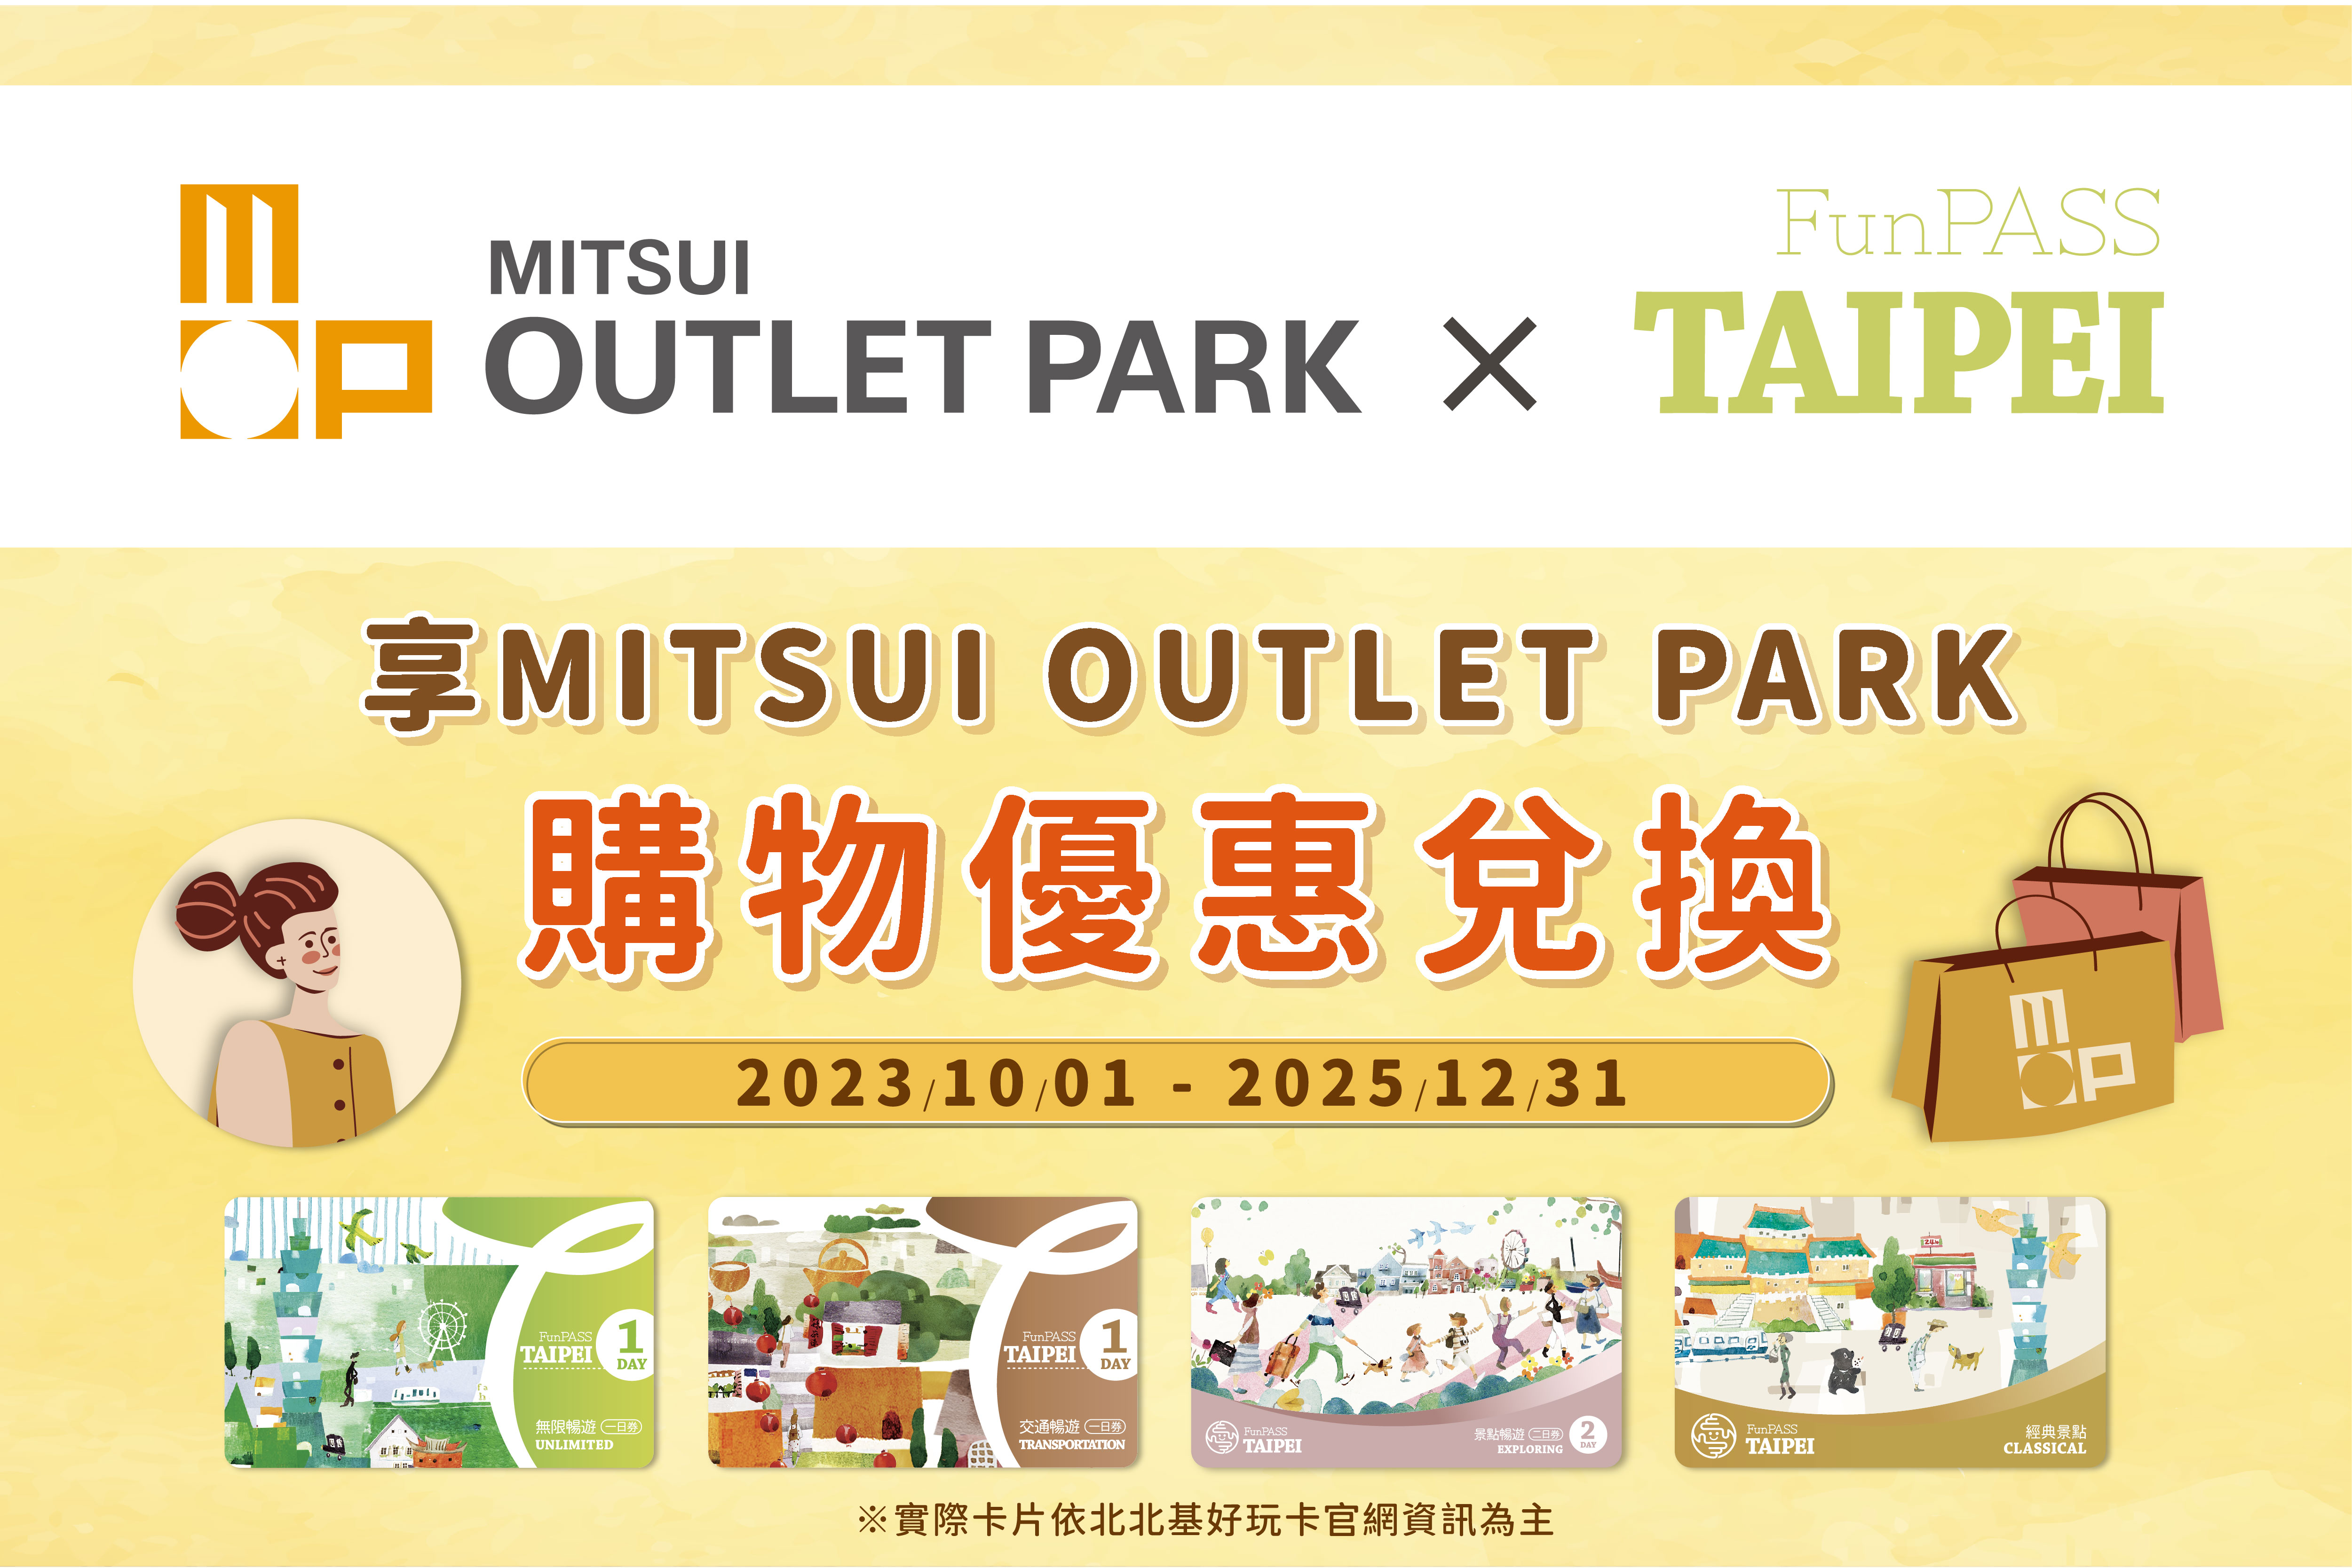 MITSUI OUTLET PARK 台中港 x Taipei FunPASS聯合優惠